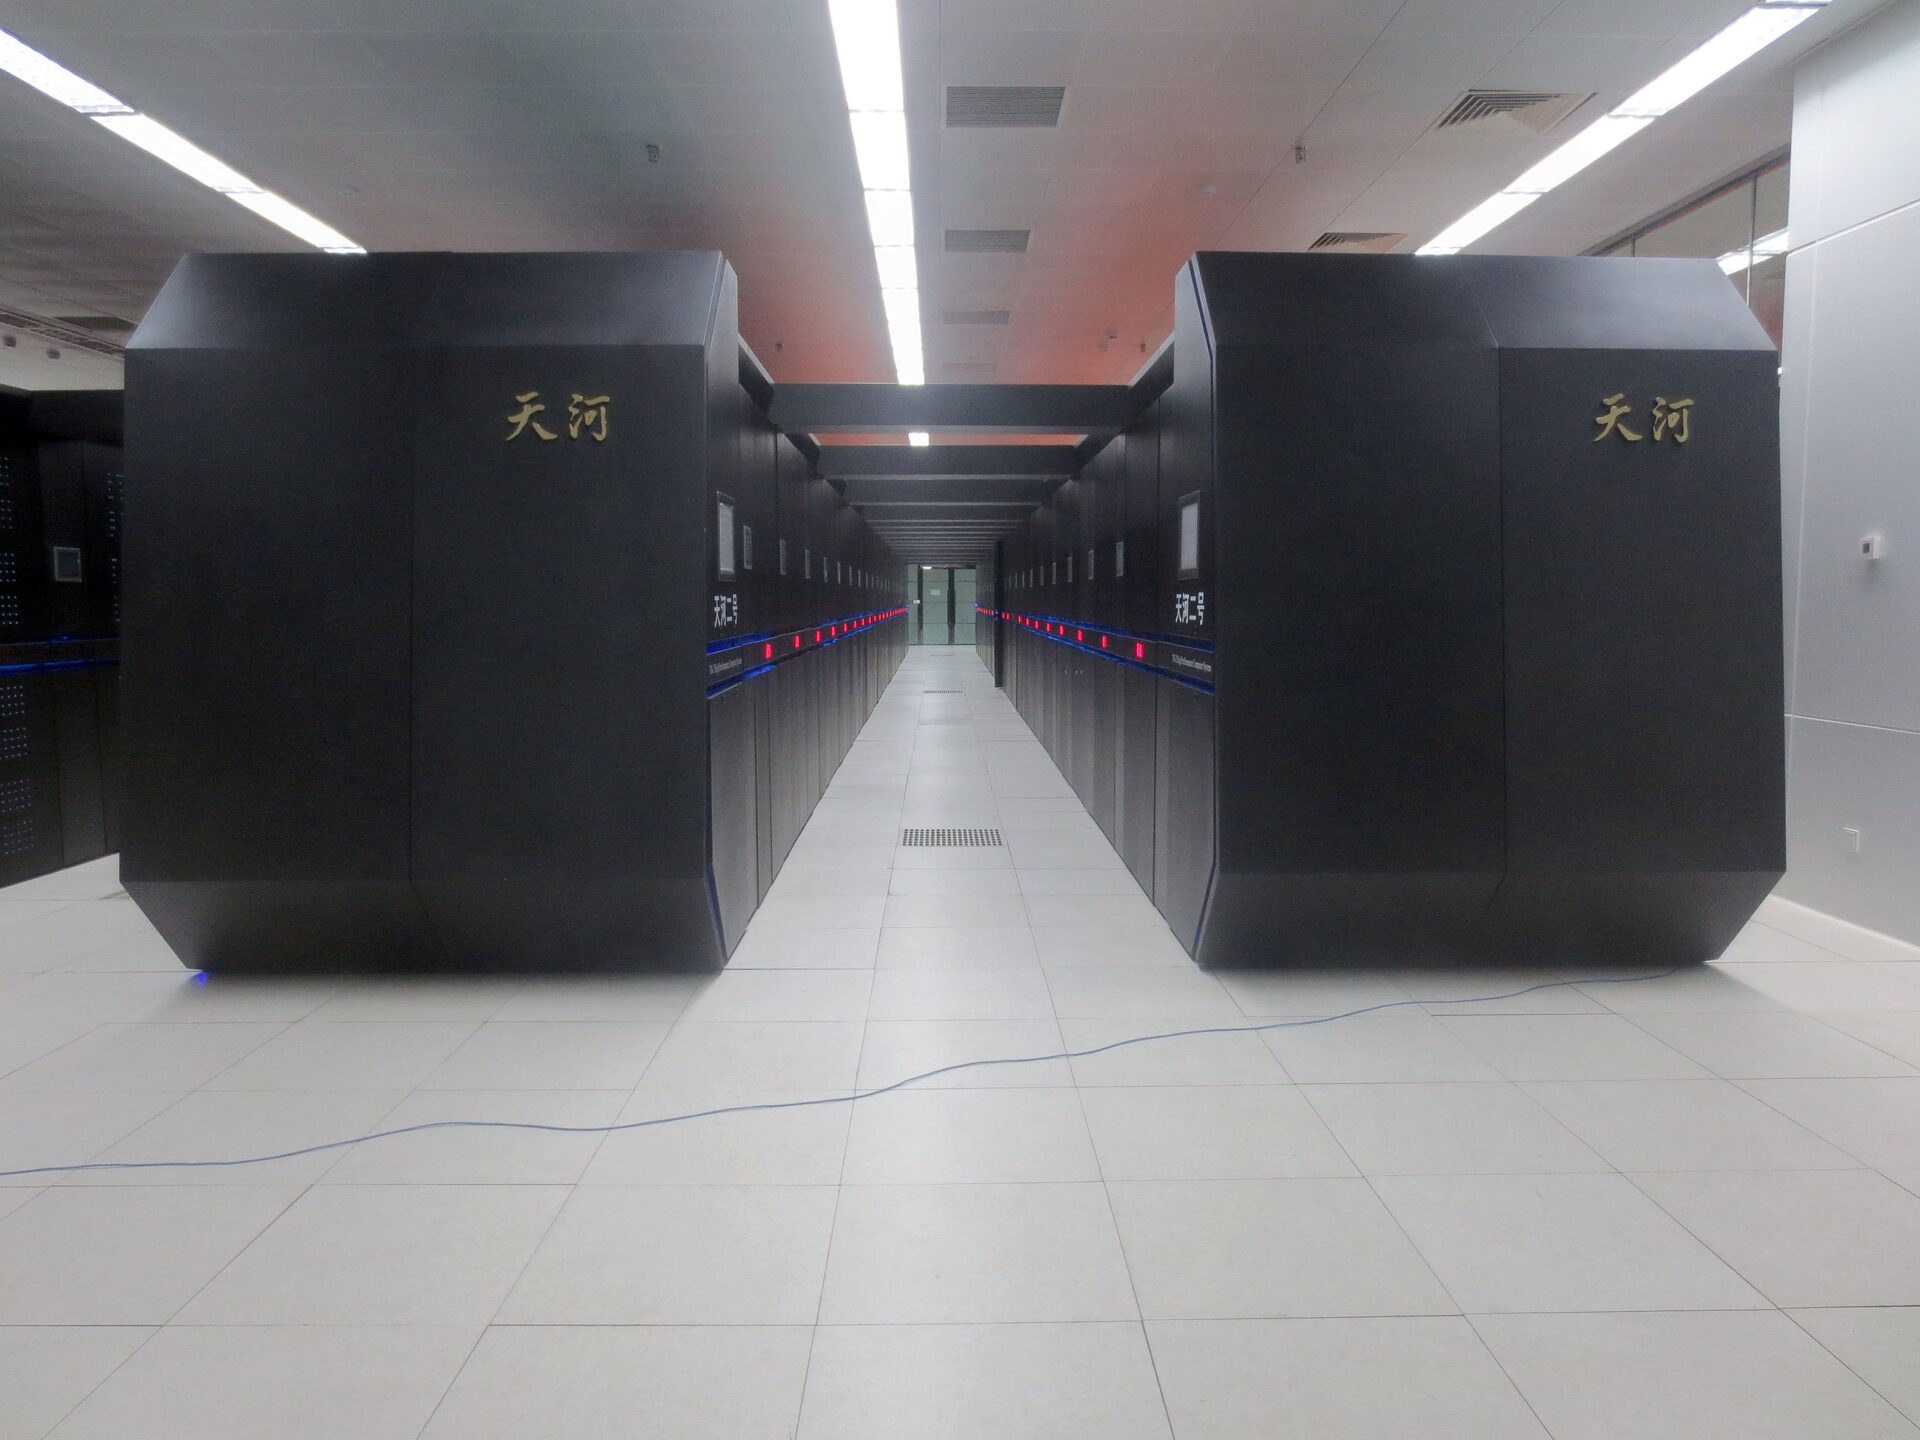 Kinas superdatamaskin lanseres i det stille